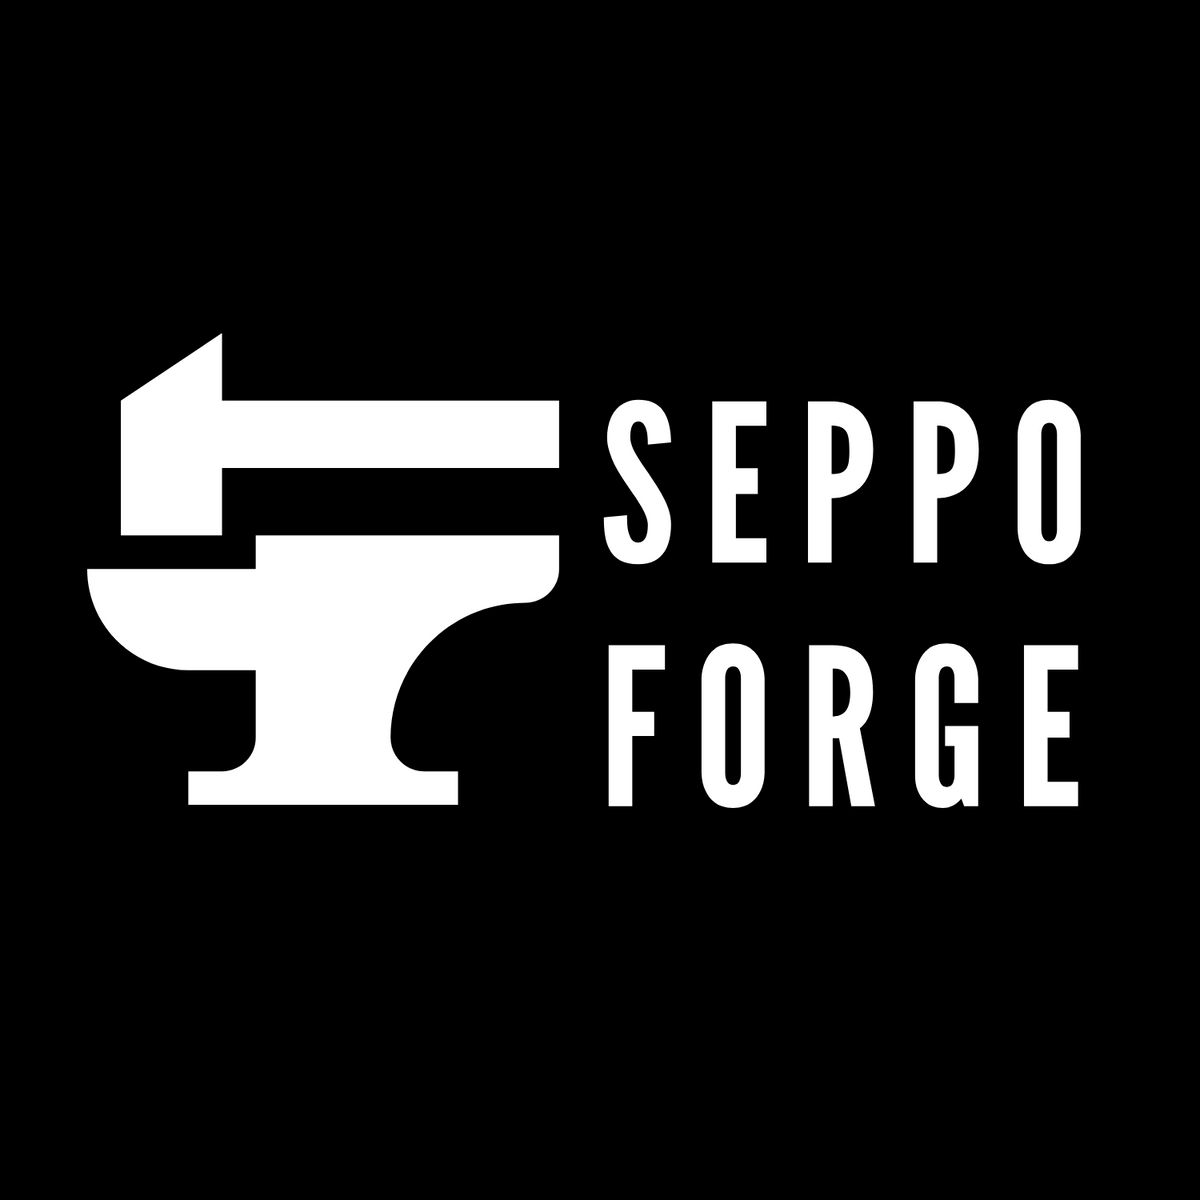 Seppo Forge